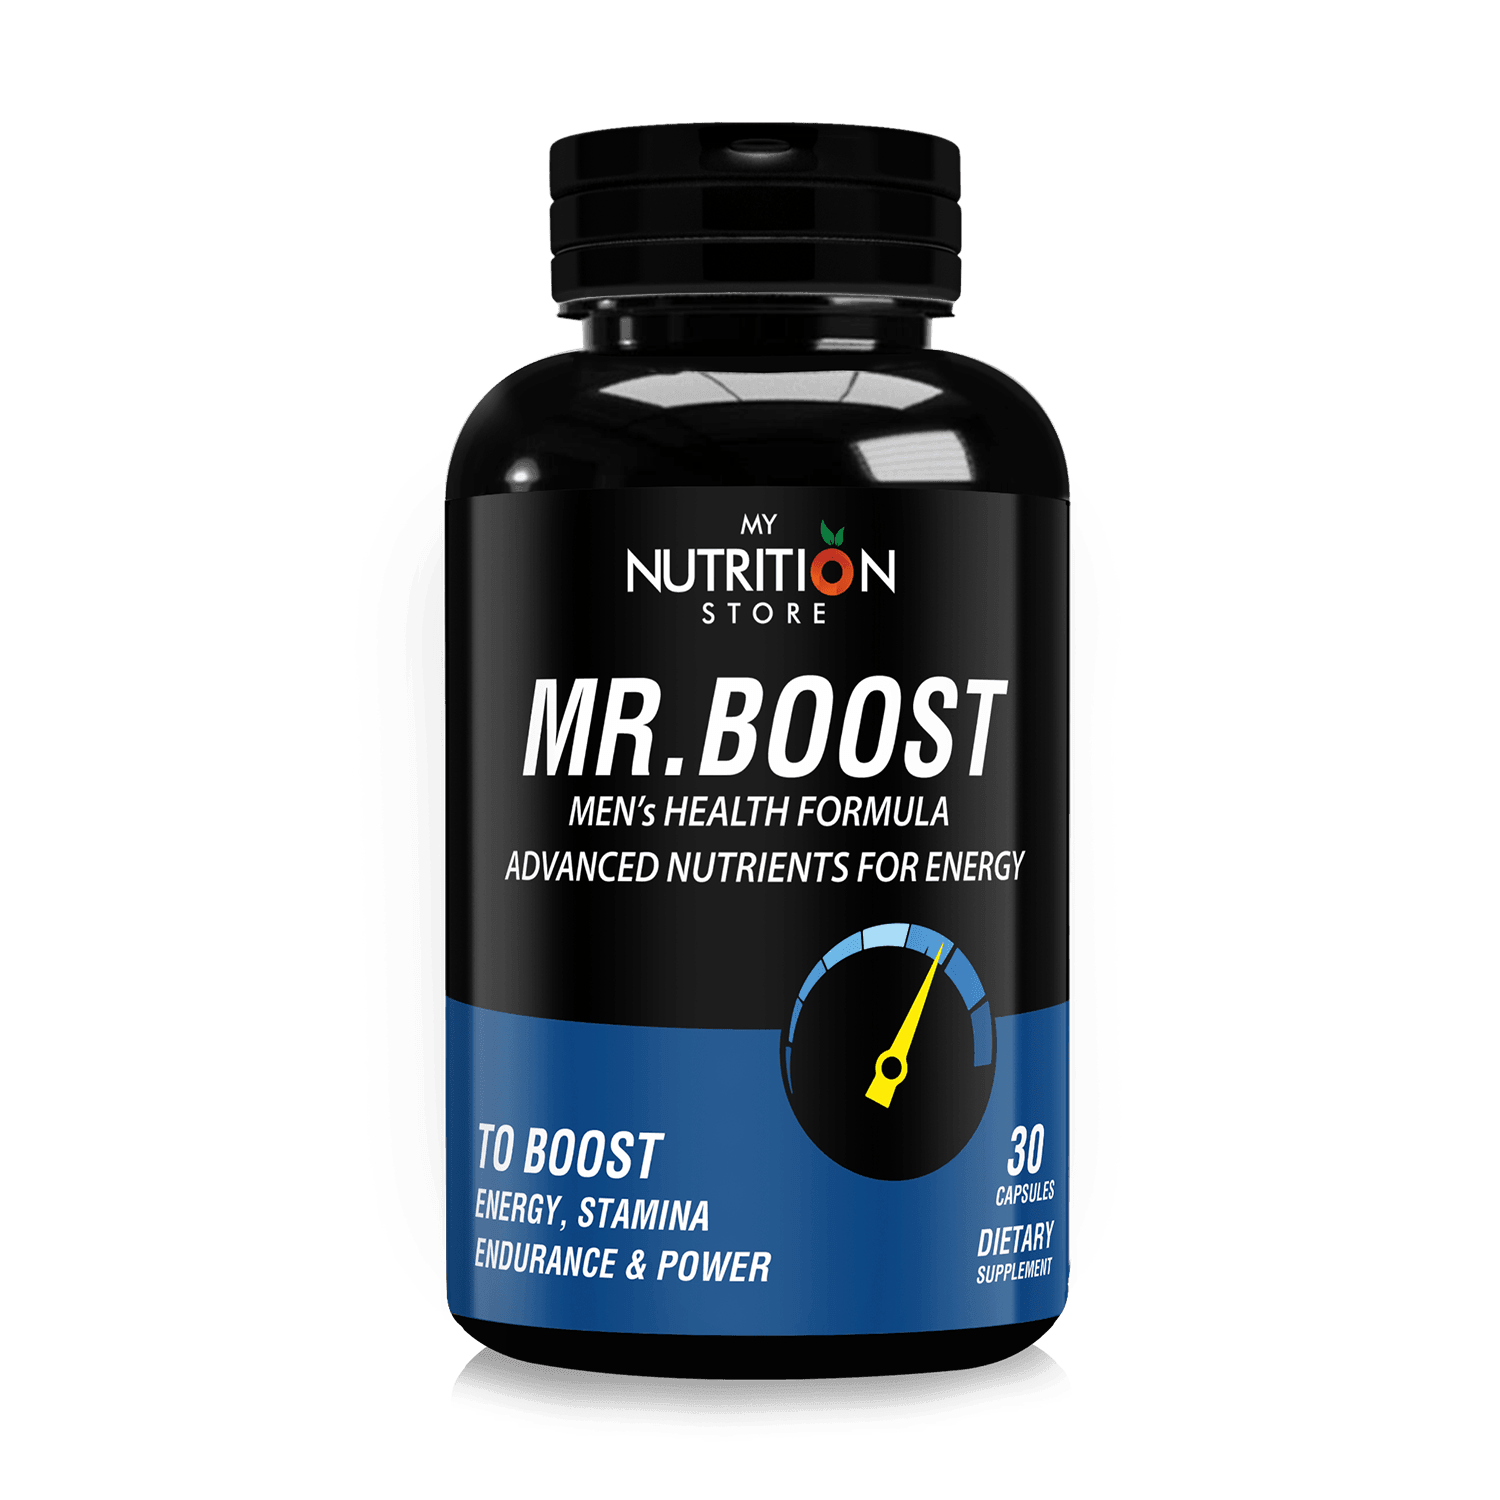 MR. BOOST ADVANCE MEN'S HEALTH SUPPLEMENT + FREE GIFT 🎁 - Healthifyme.pk